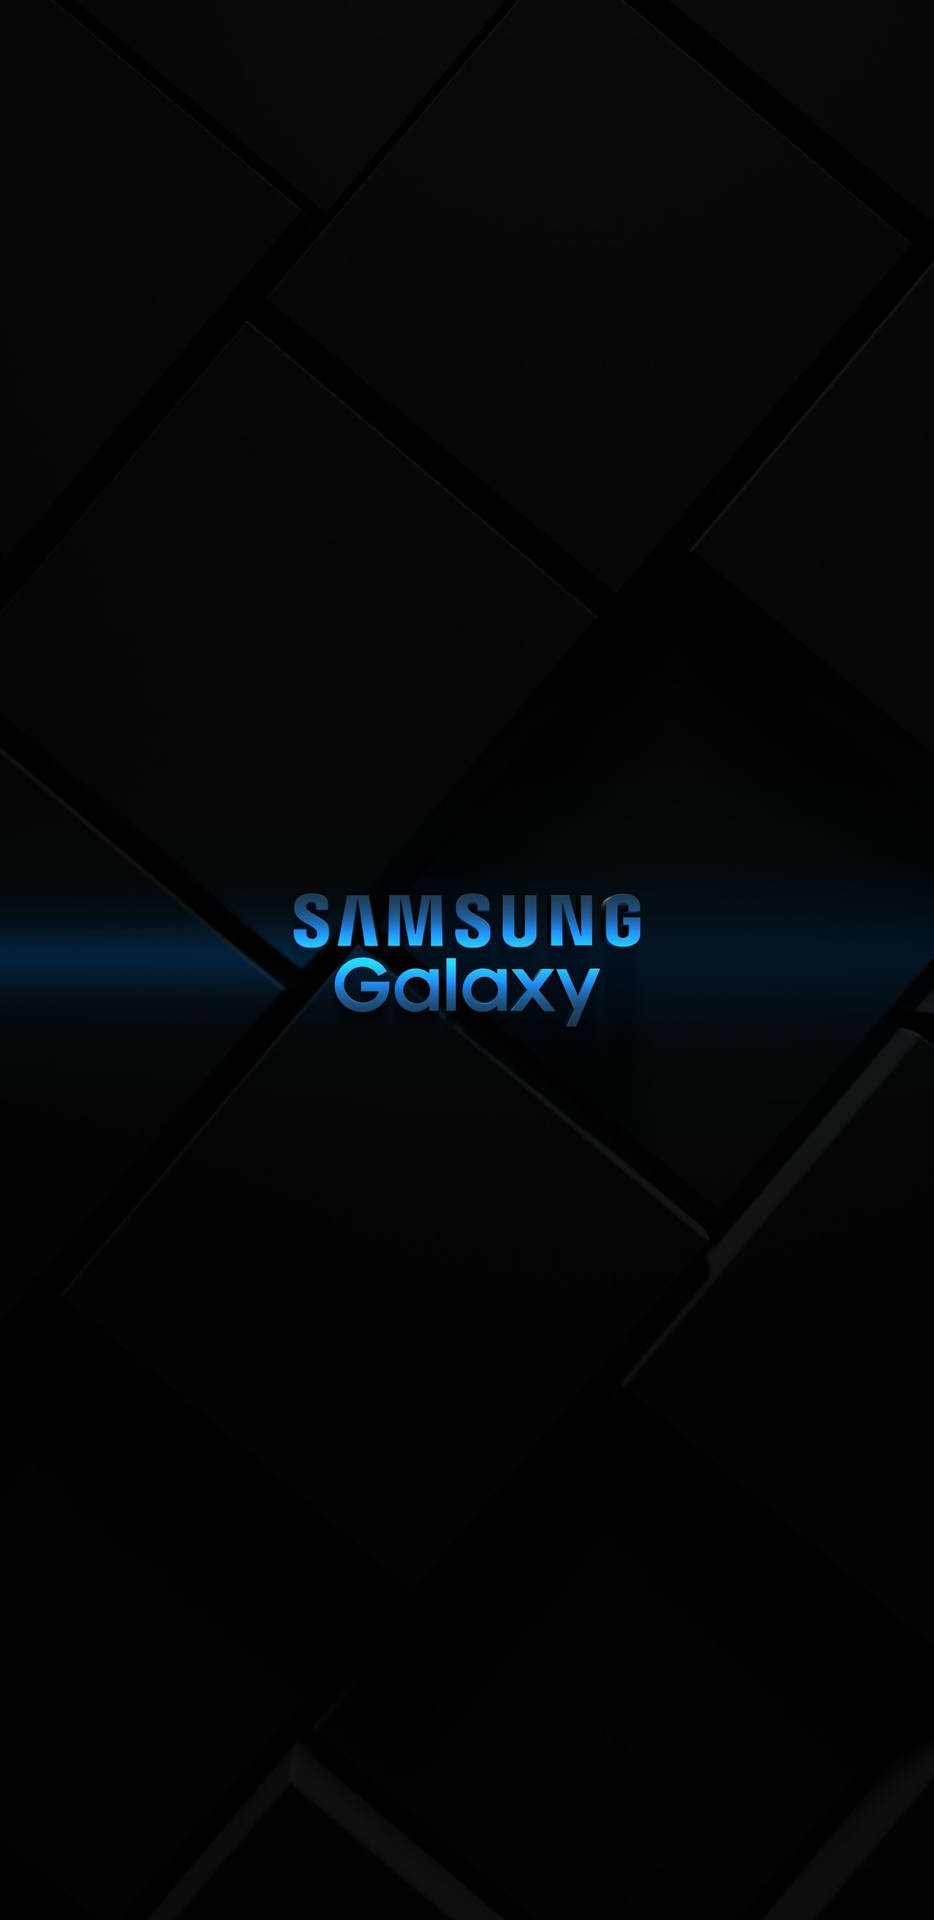 Samsung Galaxy Diamond Blue Light